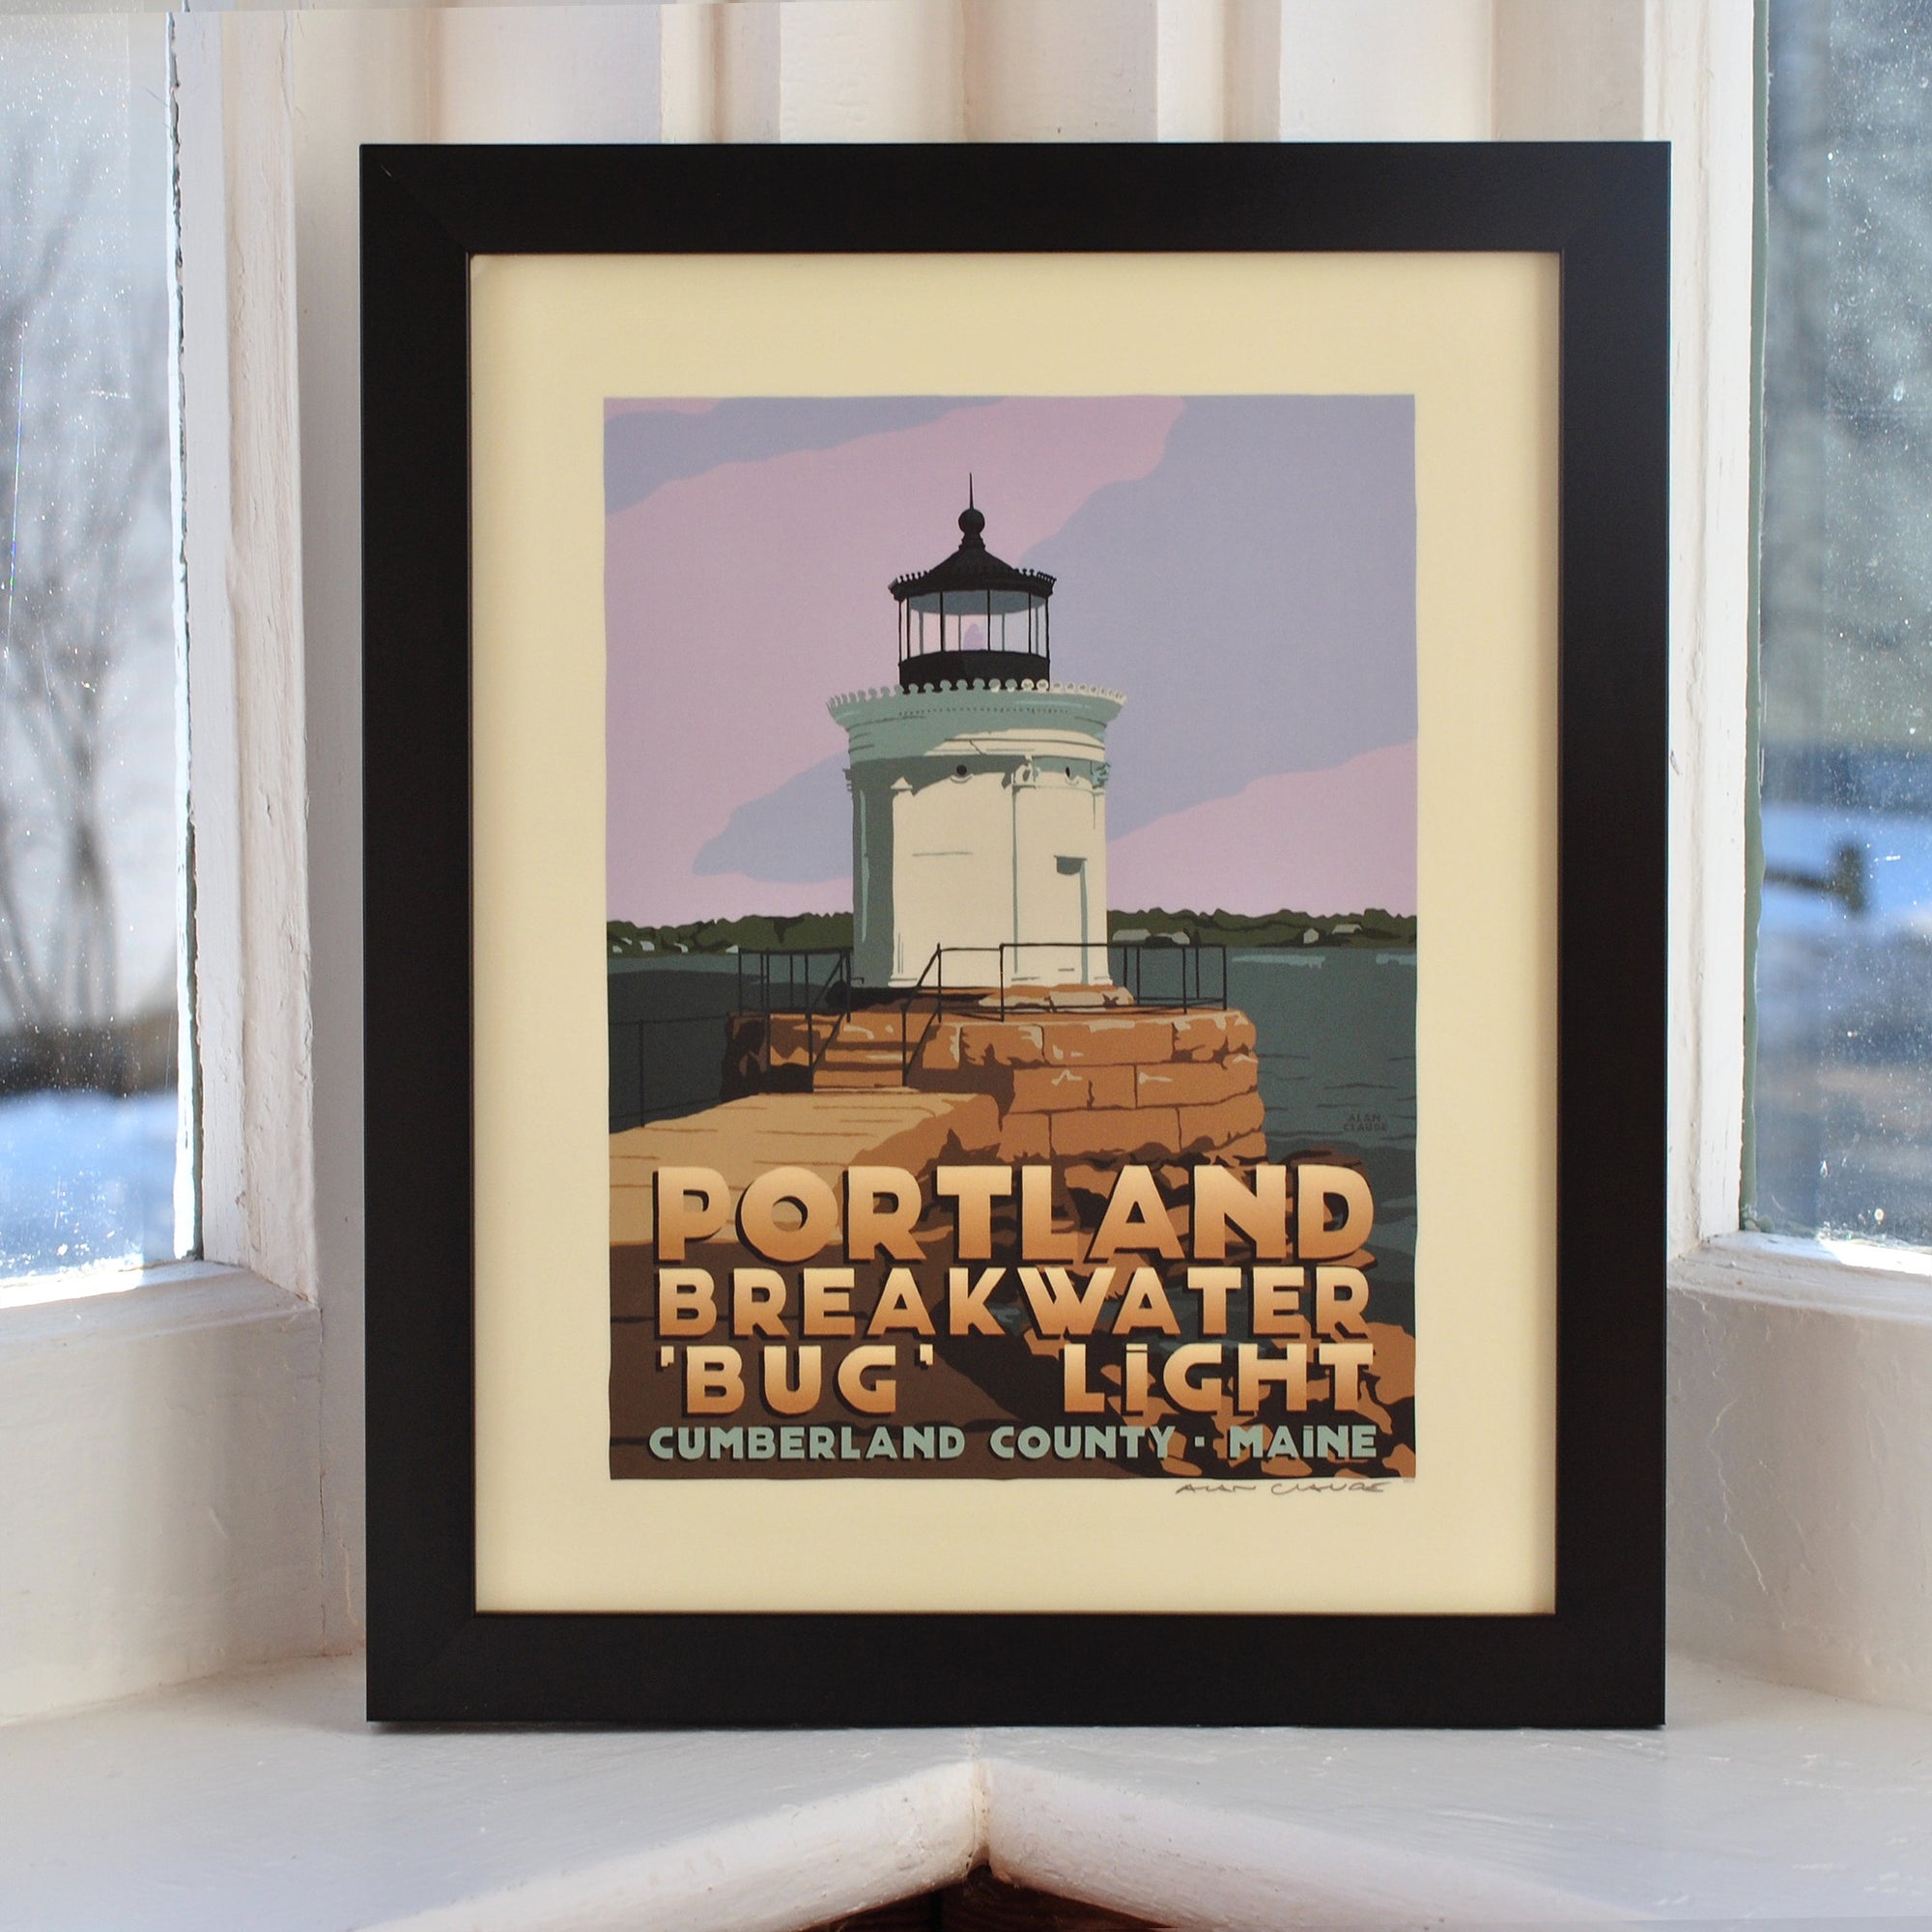 Portland Breakwater Bug Light Art Print 8" x 10" Framed Travel Poster By Alan Claude - Maine